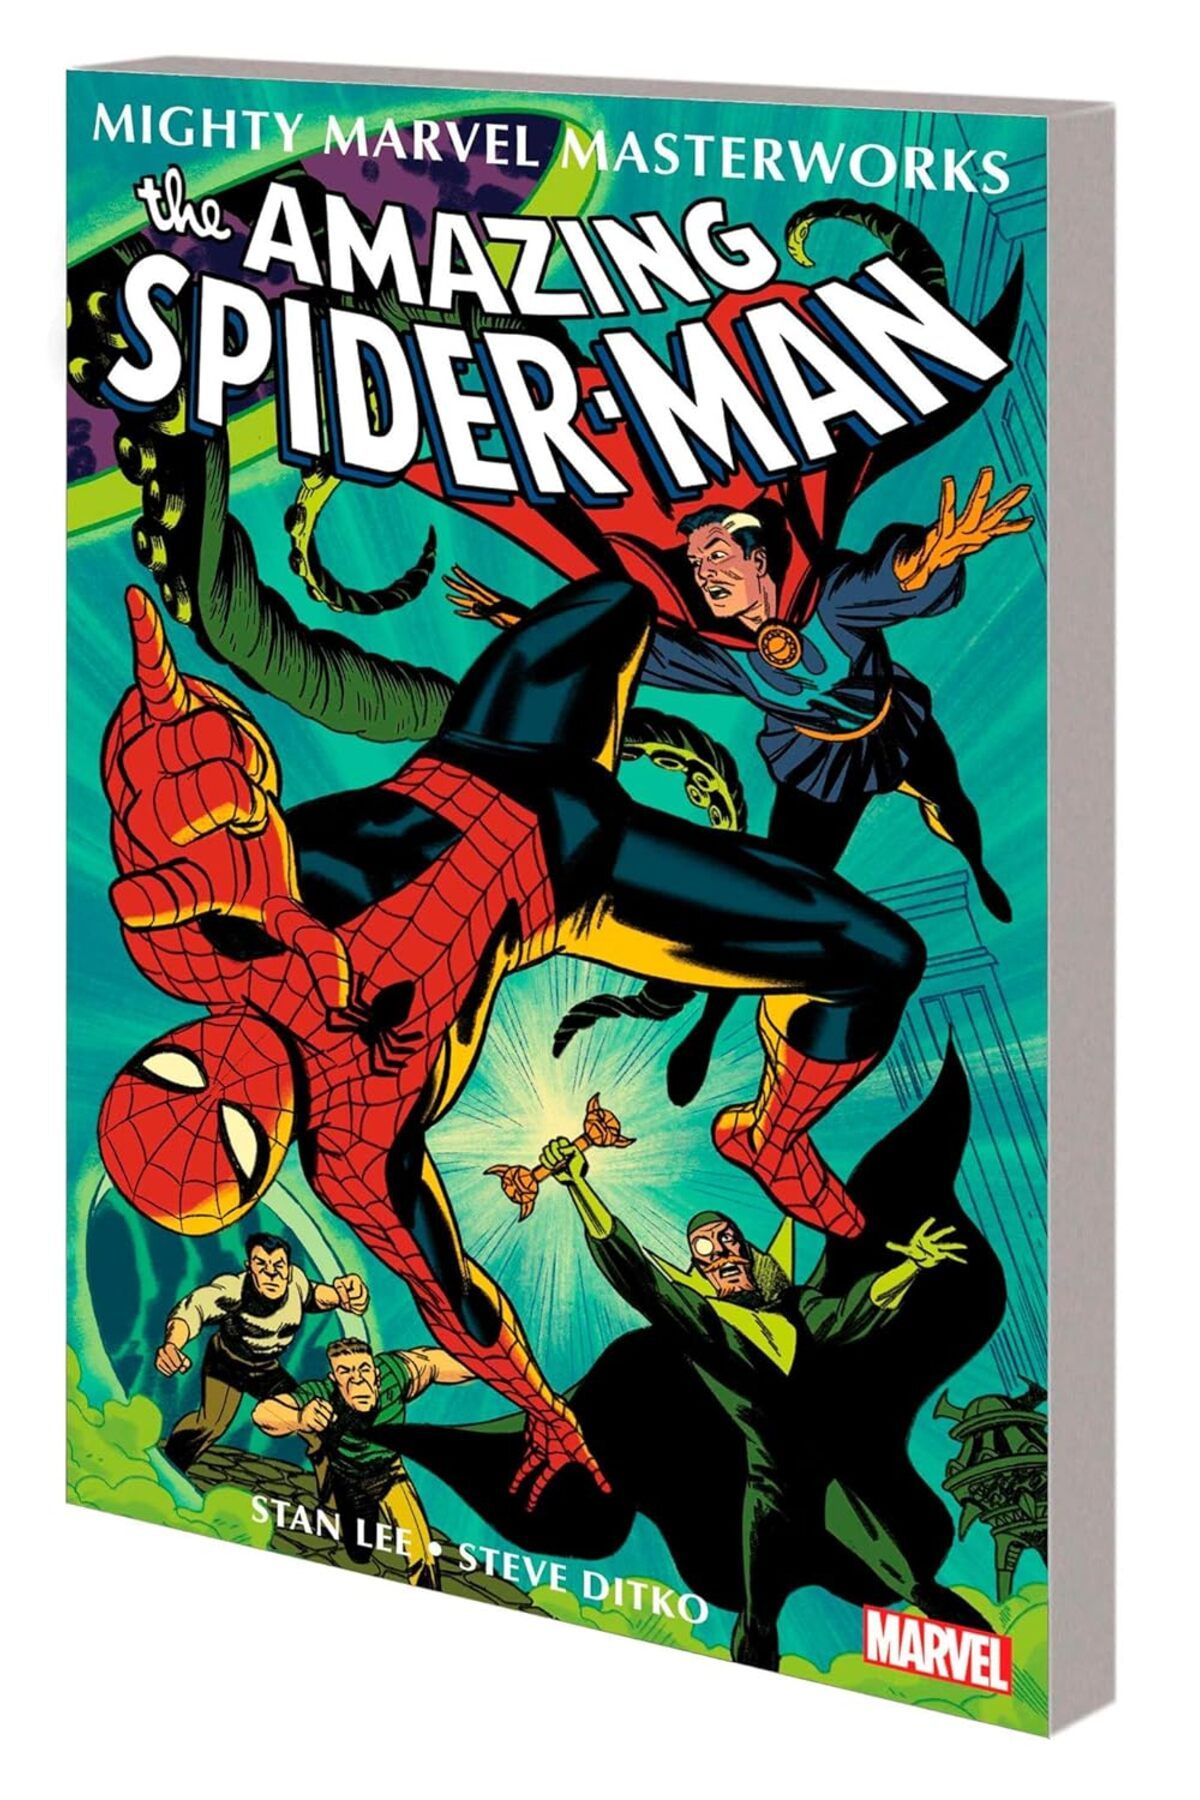 MARVEL Mighty Marvel Masterworks: The Amazing Spider-Man Vol. 3 / Volume 3